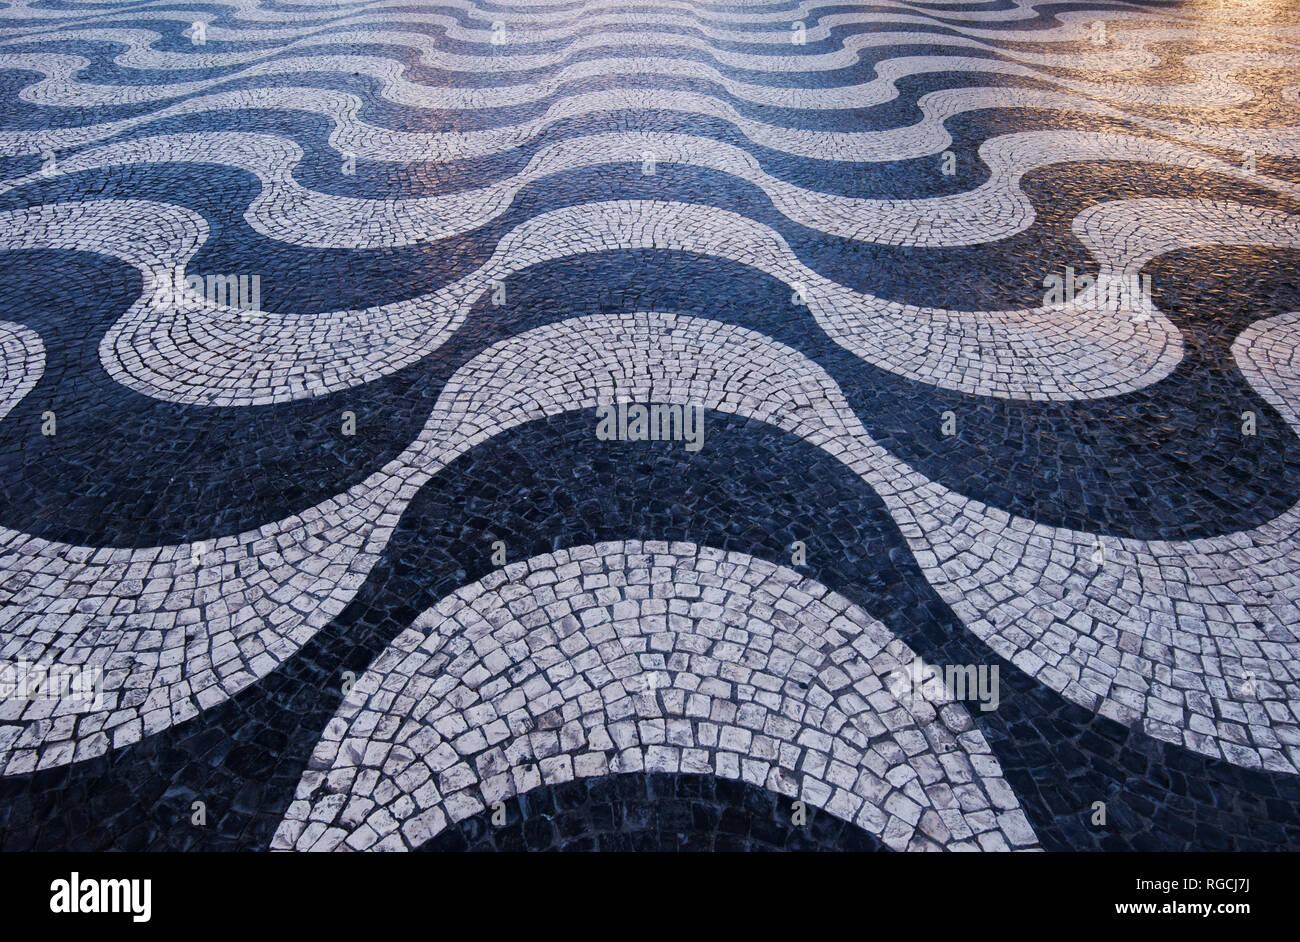 Portugal, Lisbon, Mosaic floor, detail Stock Photo